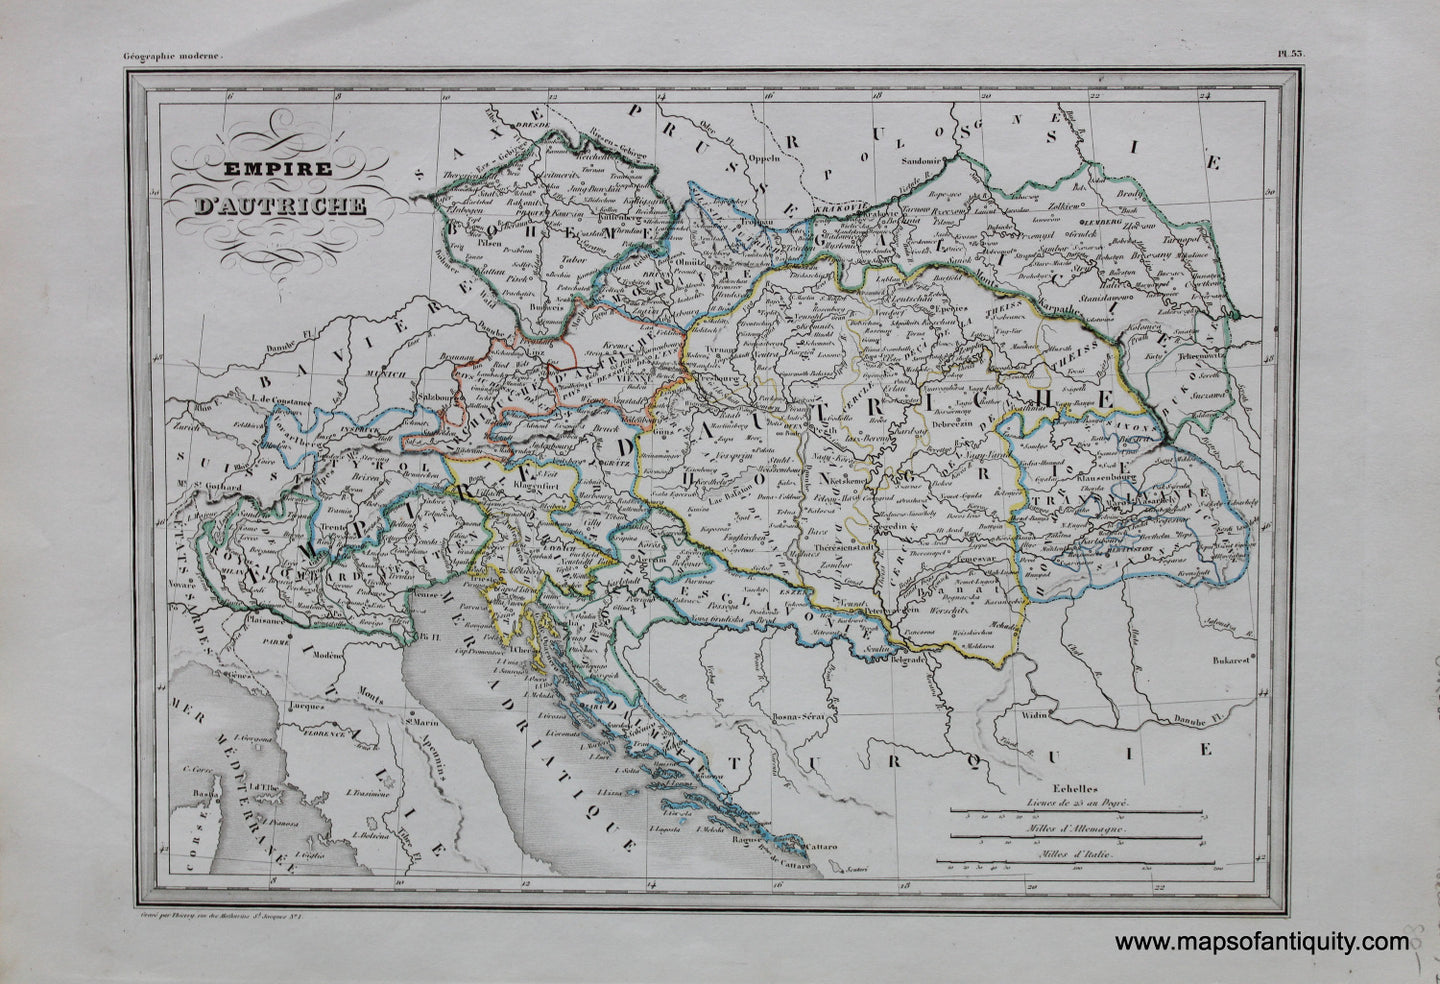 Antique-Hand-Colored-Map-Empire-D'Autriche-Europe-Europe-General-1846-M.-Malte-Brun-Maps-Of-Antiquity